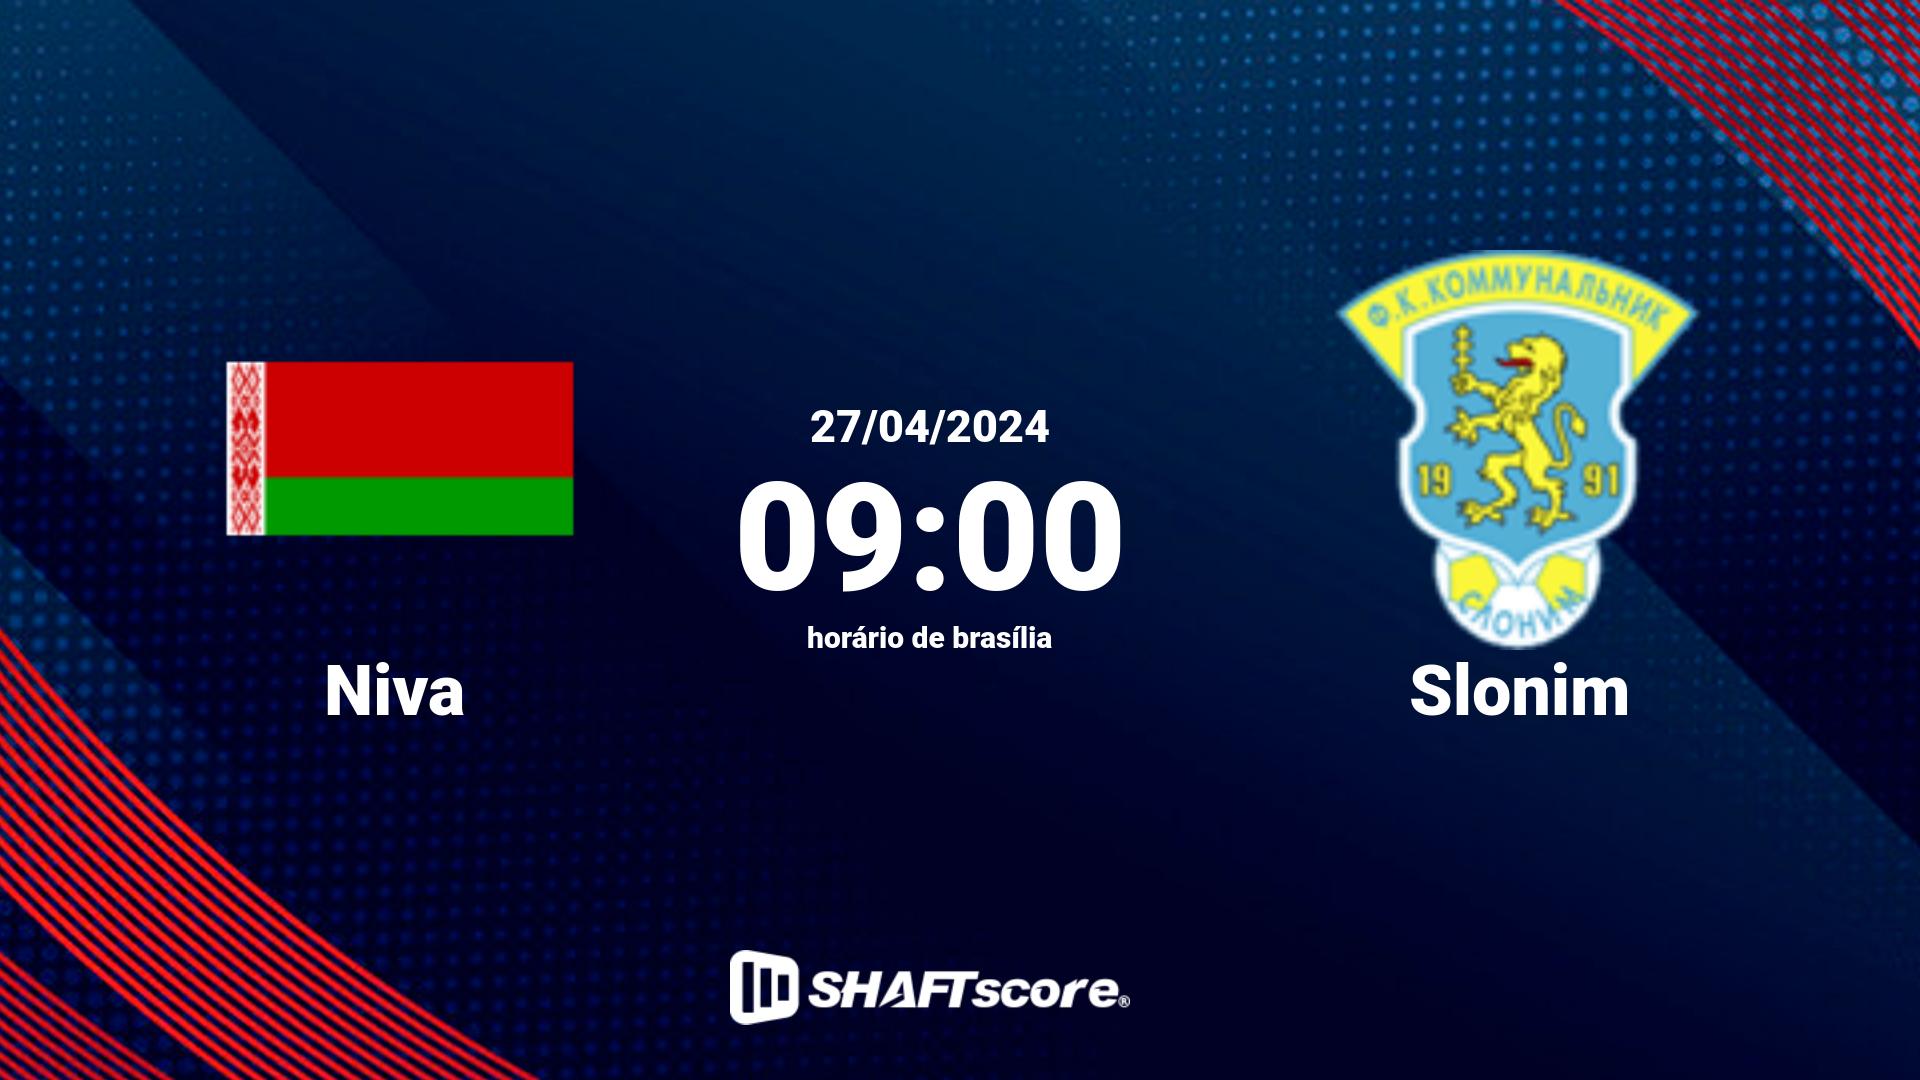 Estatísticas do jogo Niva vs Slonim 27.04 09:00